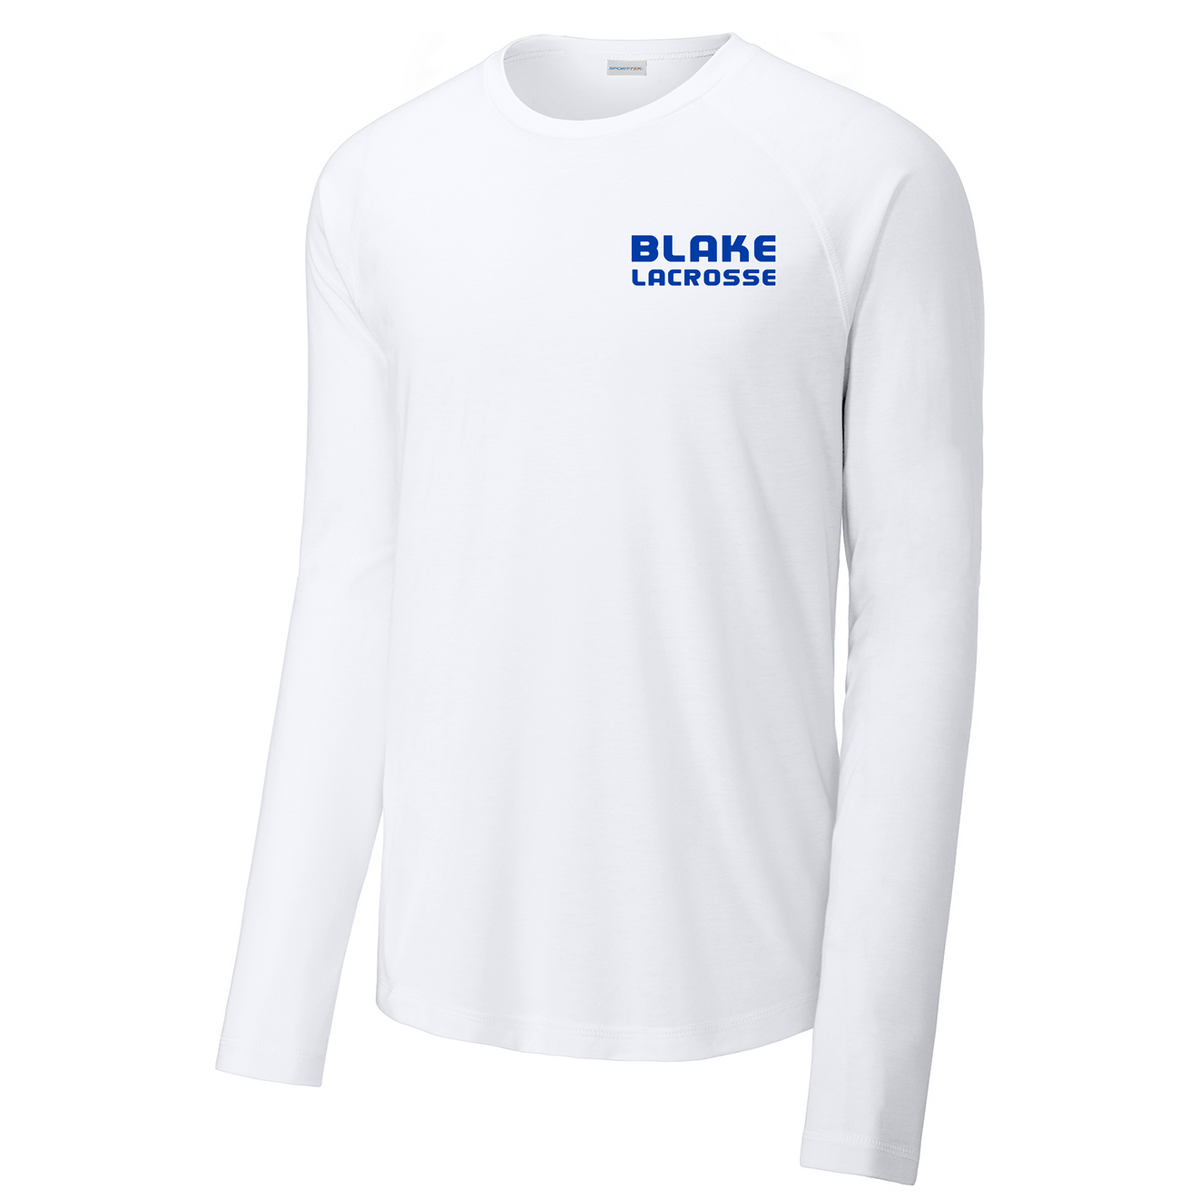 Blake Lacrosse Long Sleeve Raglan CottonTouch